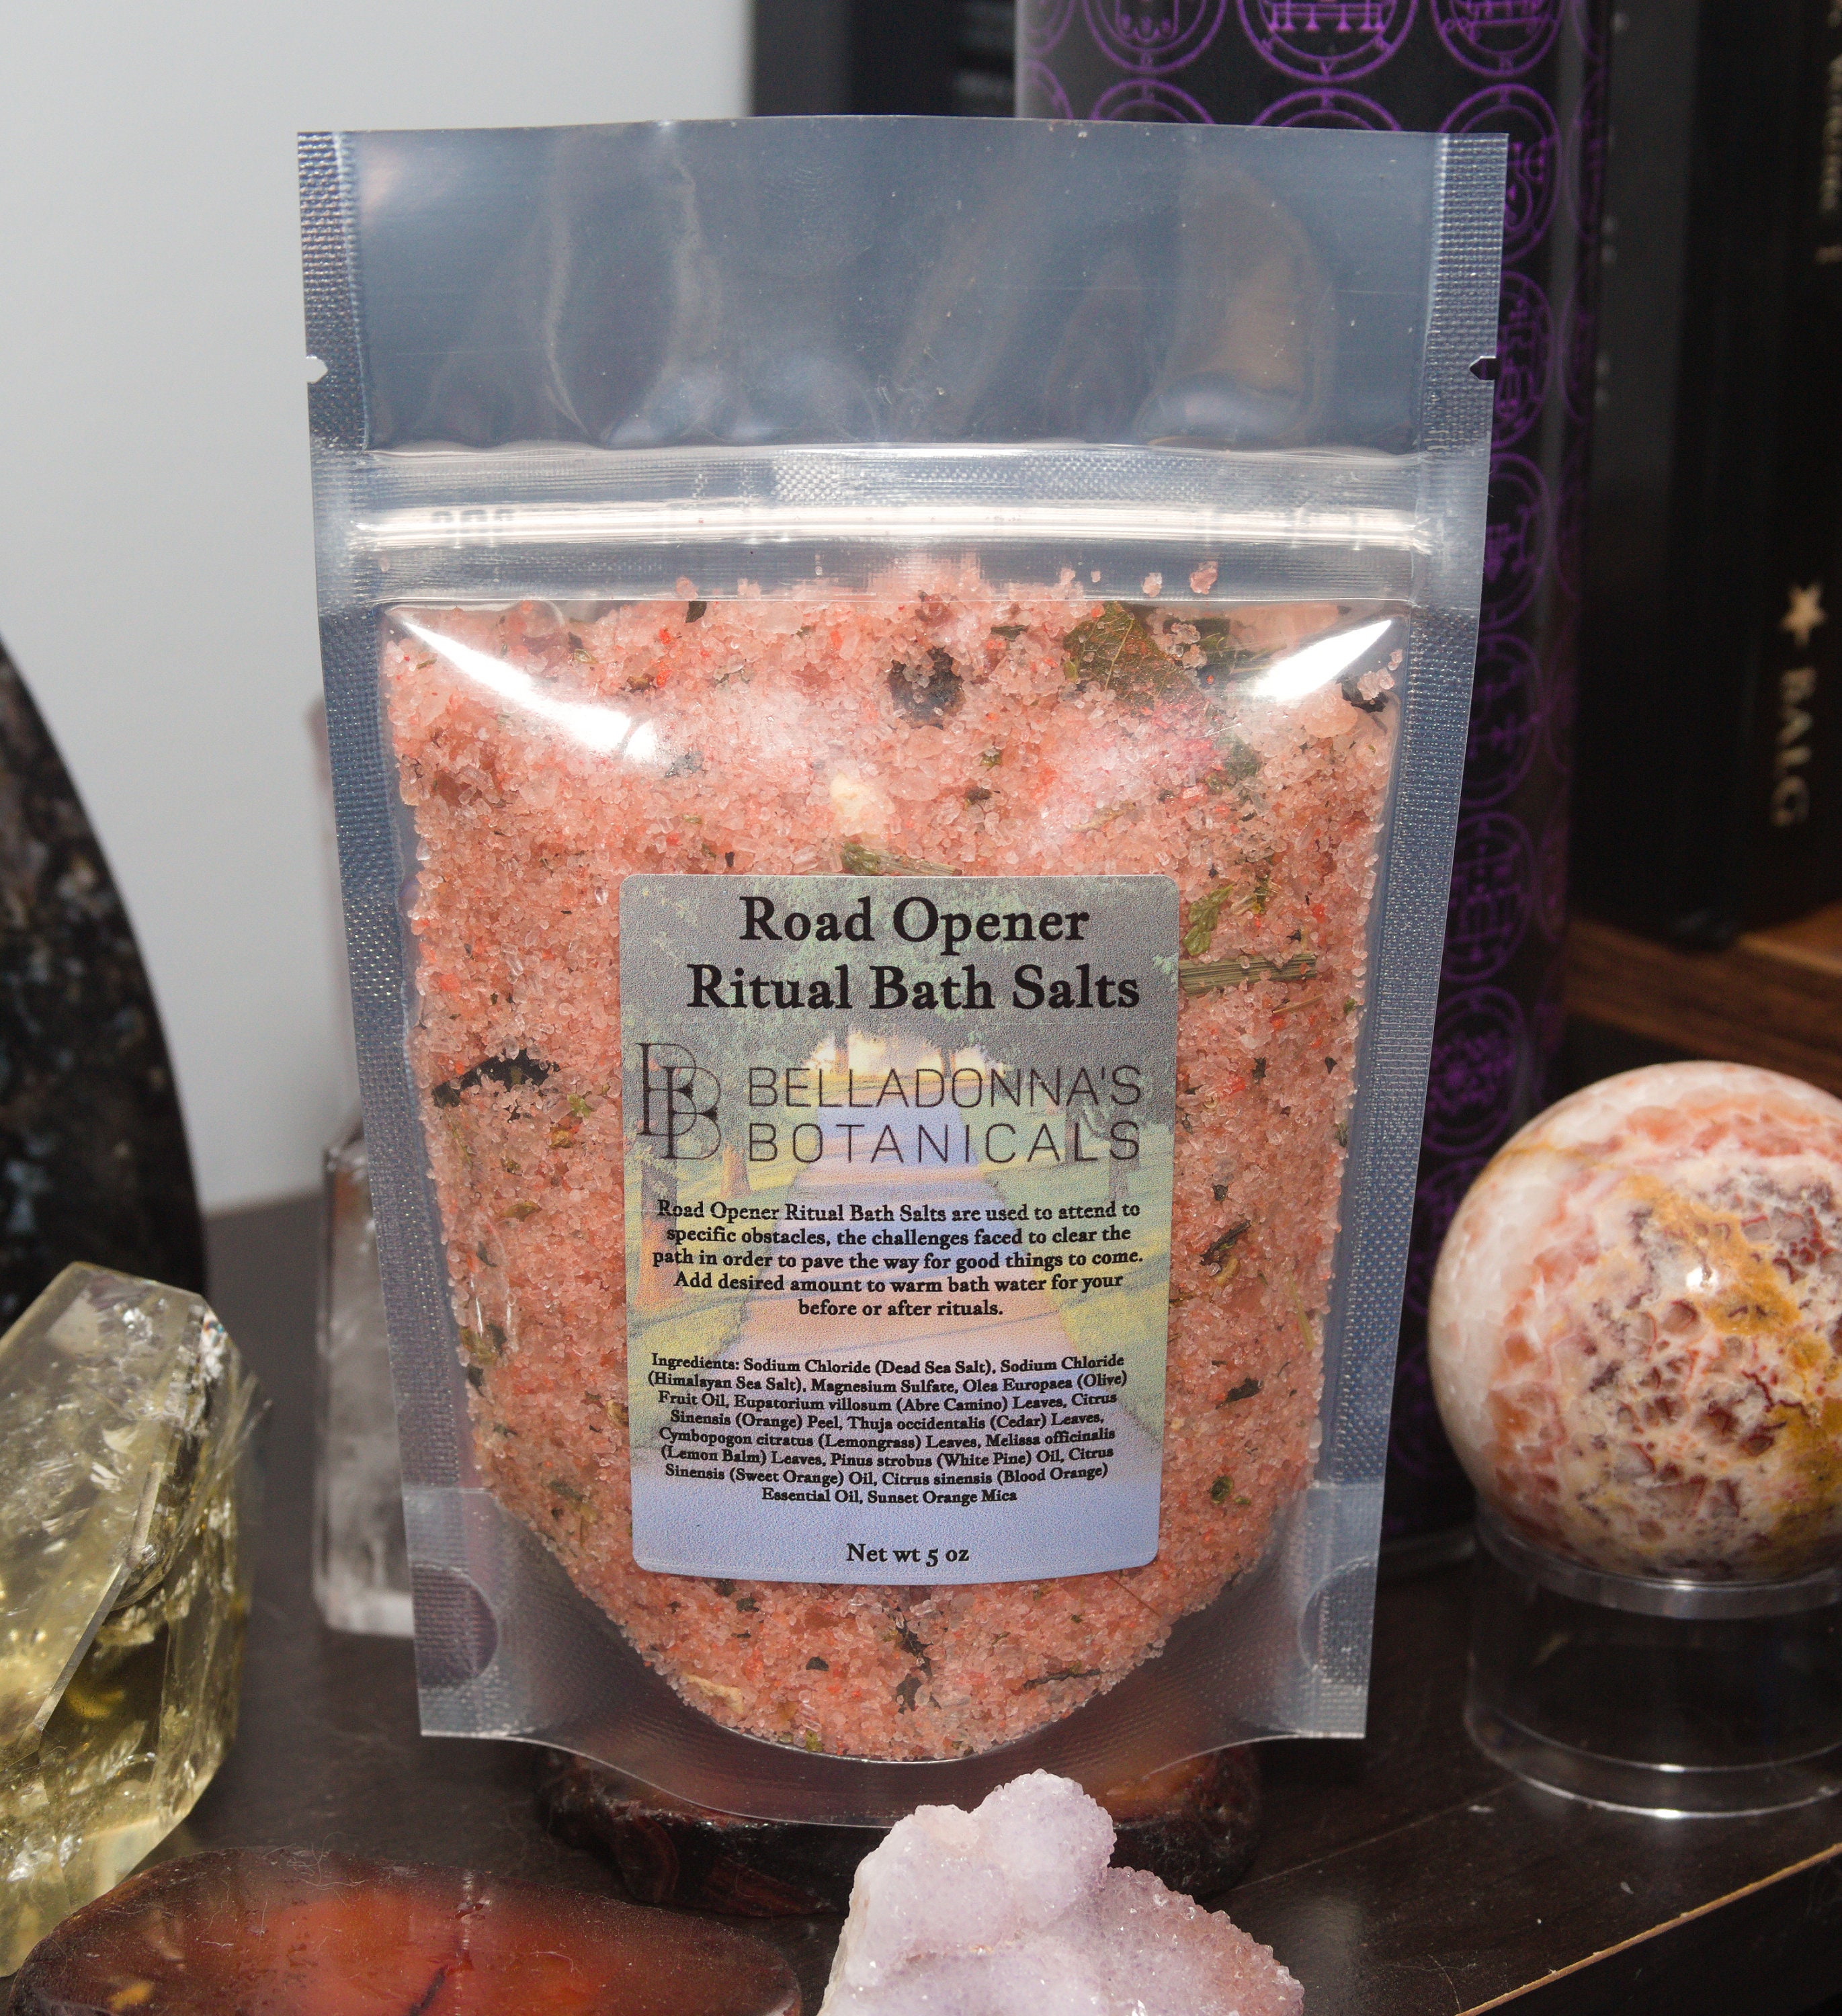 Rituals Fortune Sweet Orange & Cedar Shower Gel, 8.5 Oz - 10 Pack